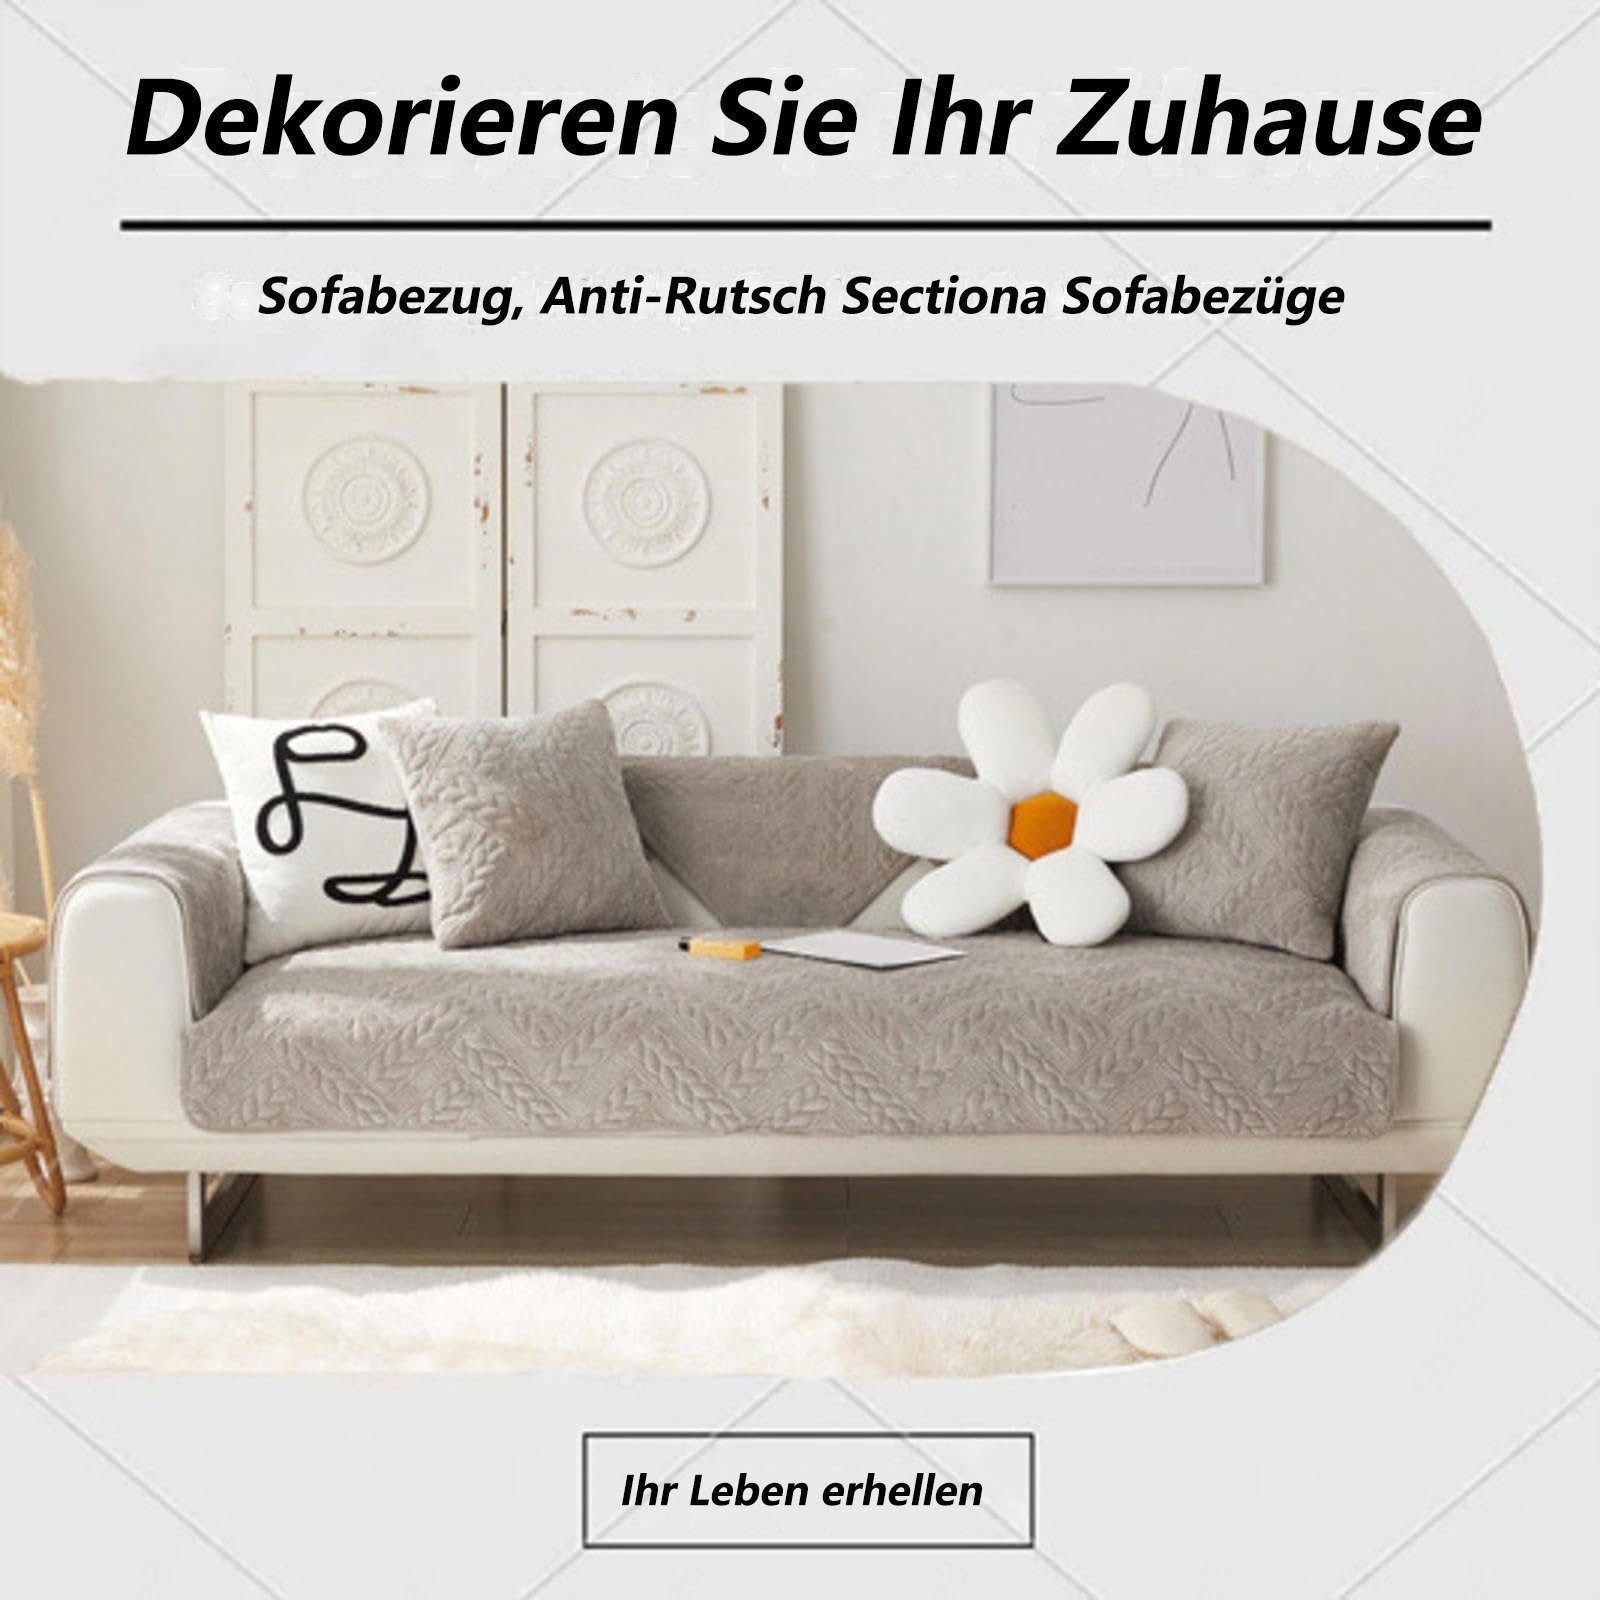 Sofabezug hellgrau(90*120cm) Sofabezug, Super warmer Juoungle rutschfeste Weicherdecke Sofadecke, Sofabezug